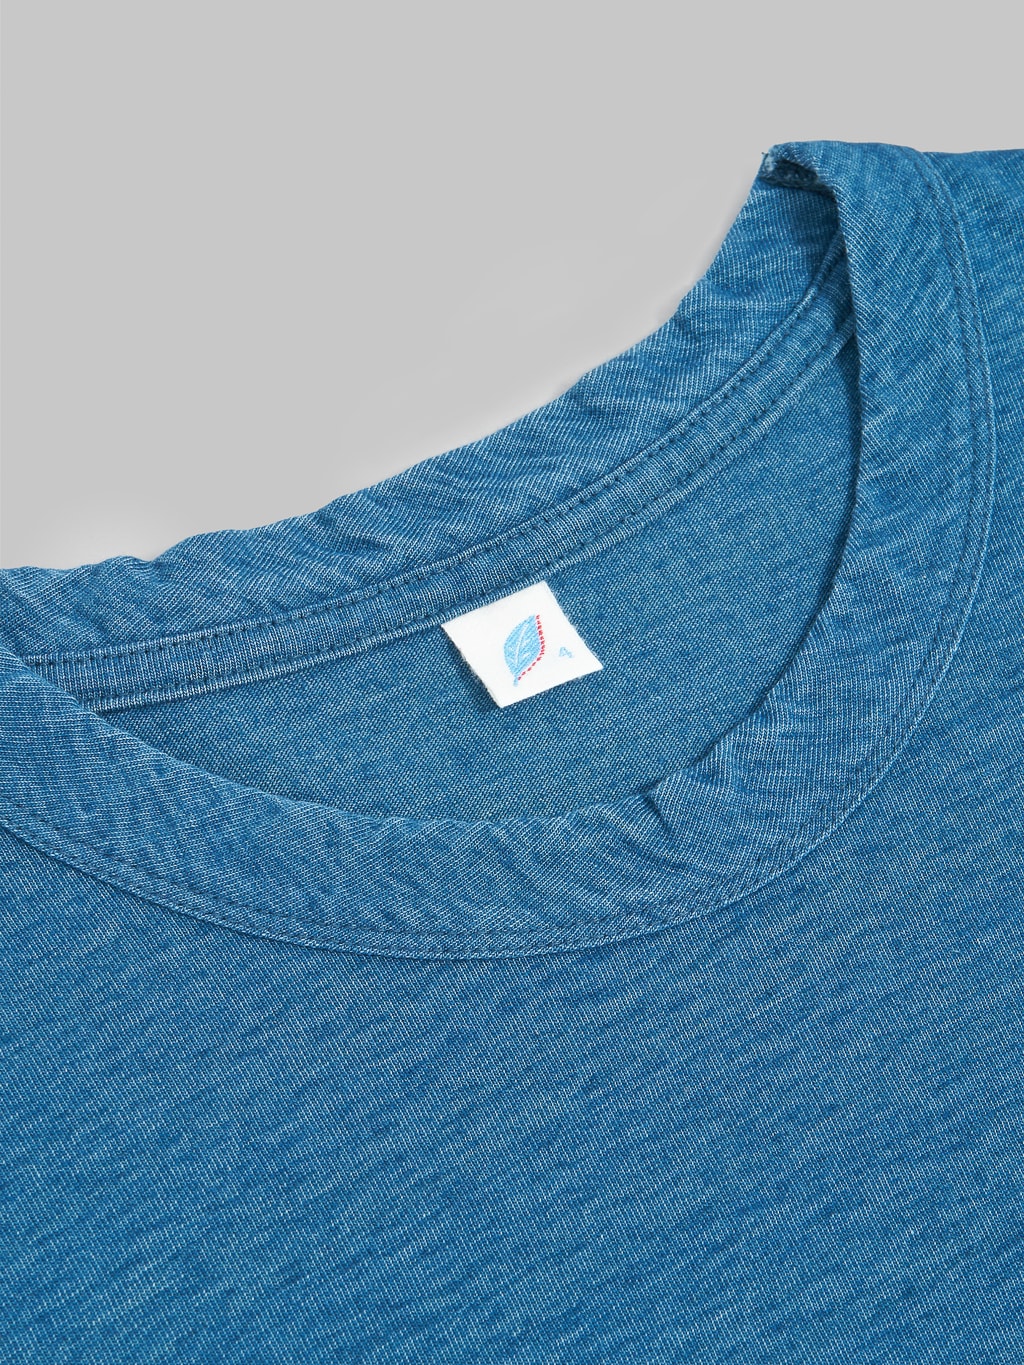 pure blue japan greencast tshirt collar stitching